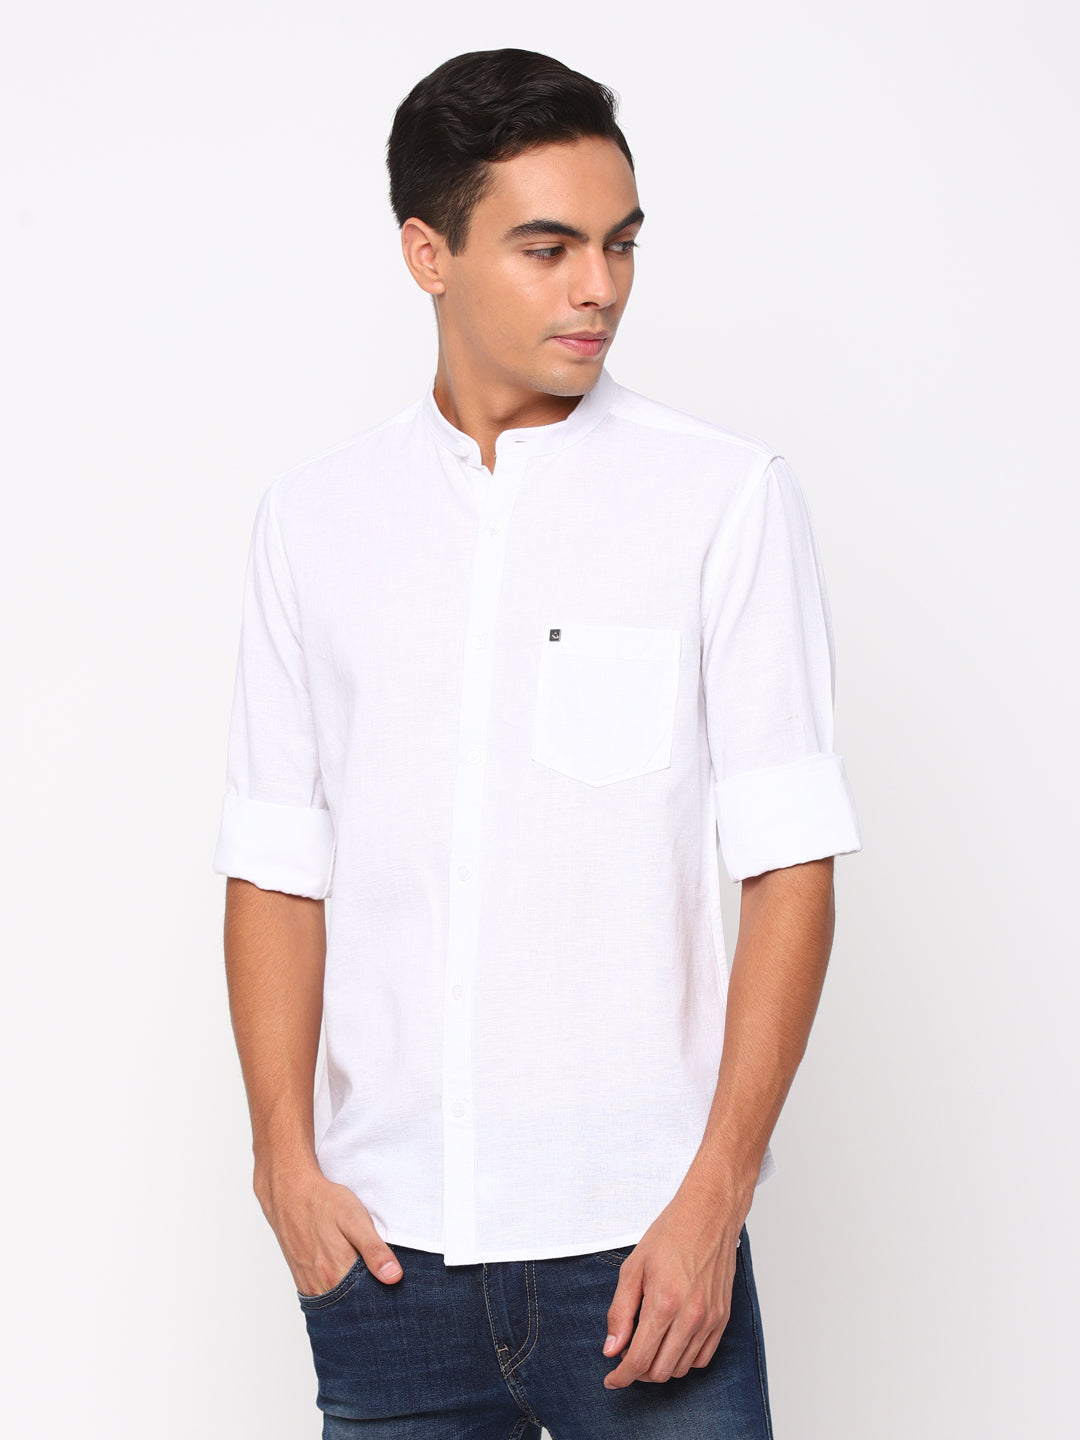 slim fit plain white cotton linen shirt with Mandarin collar